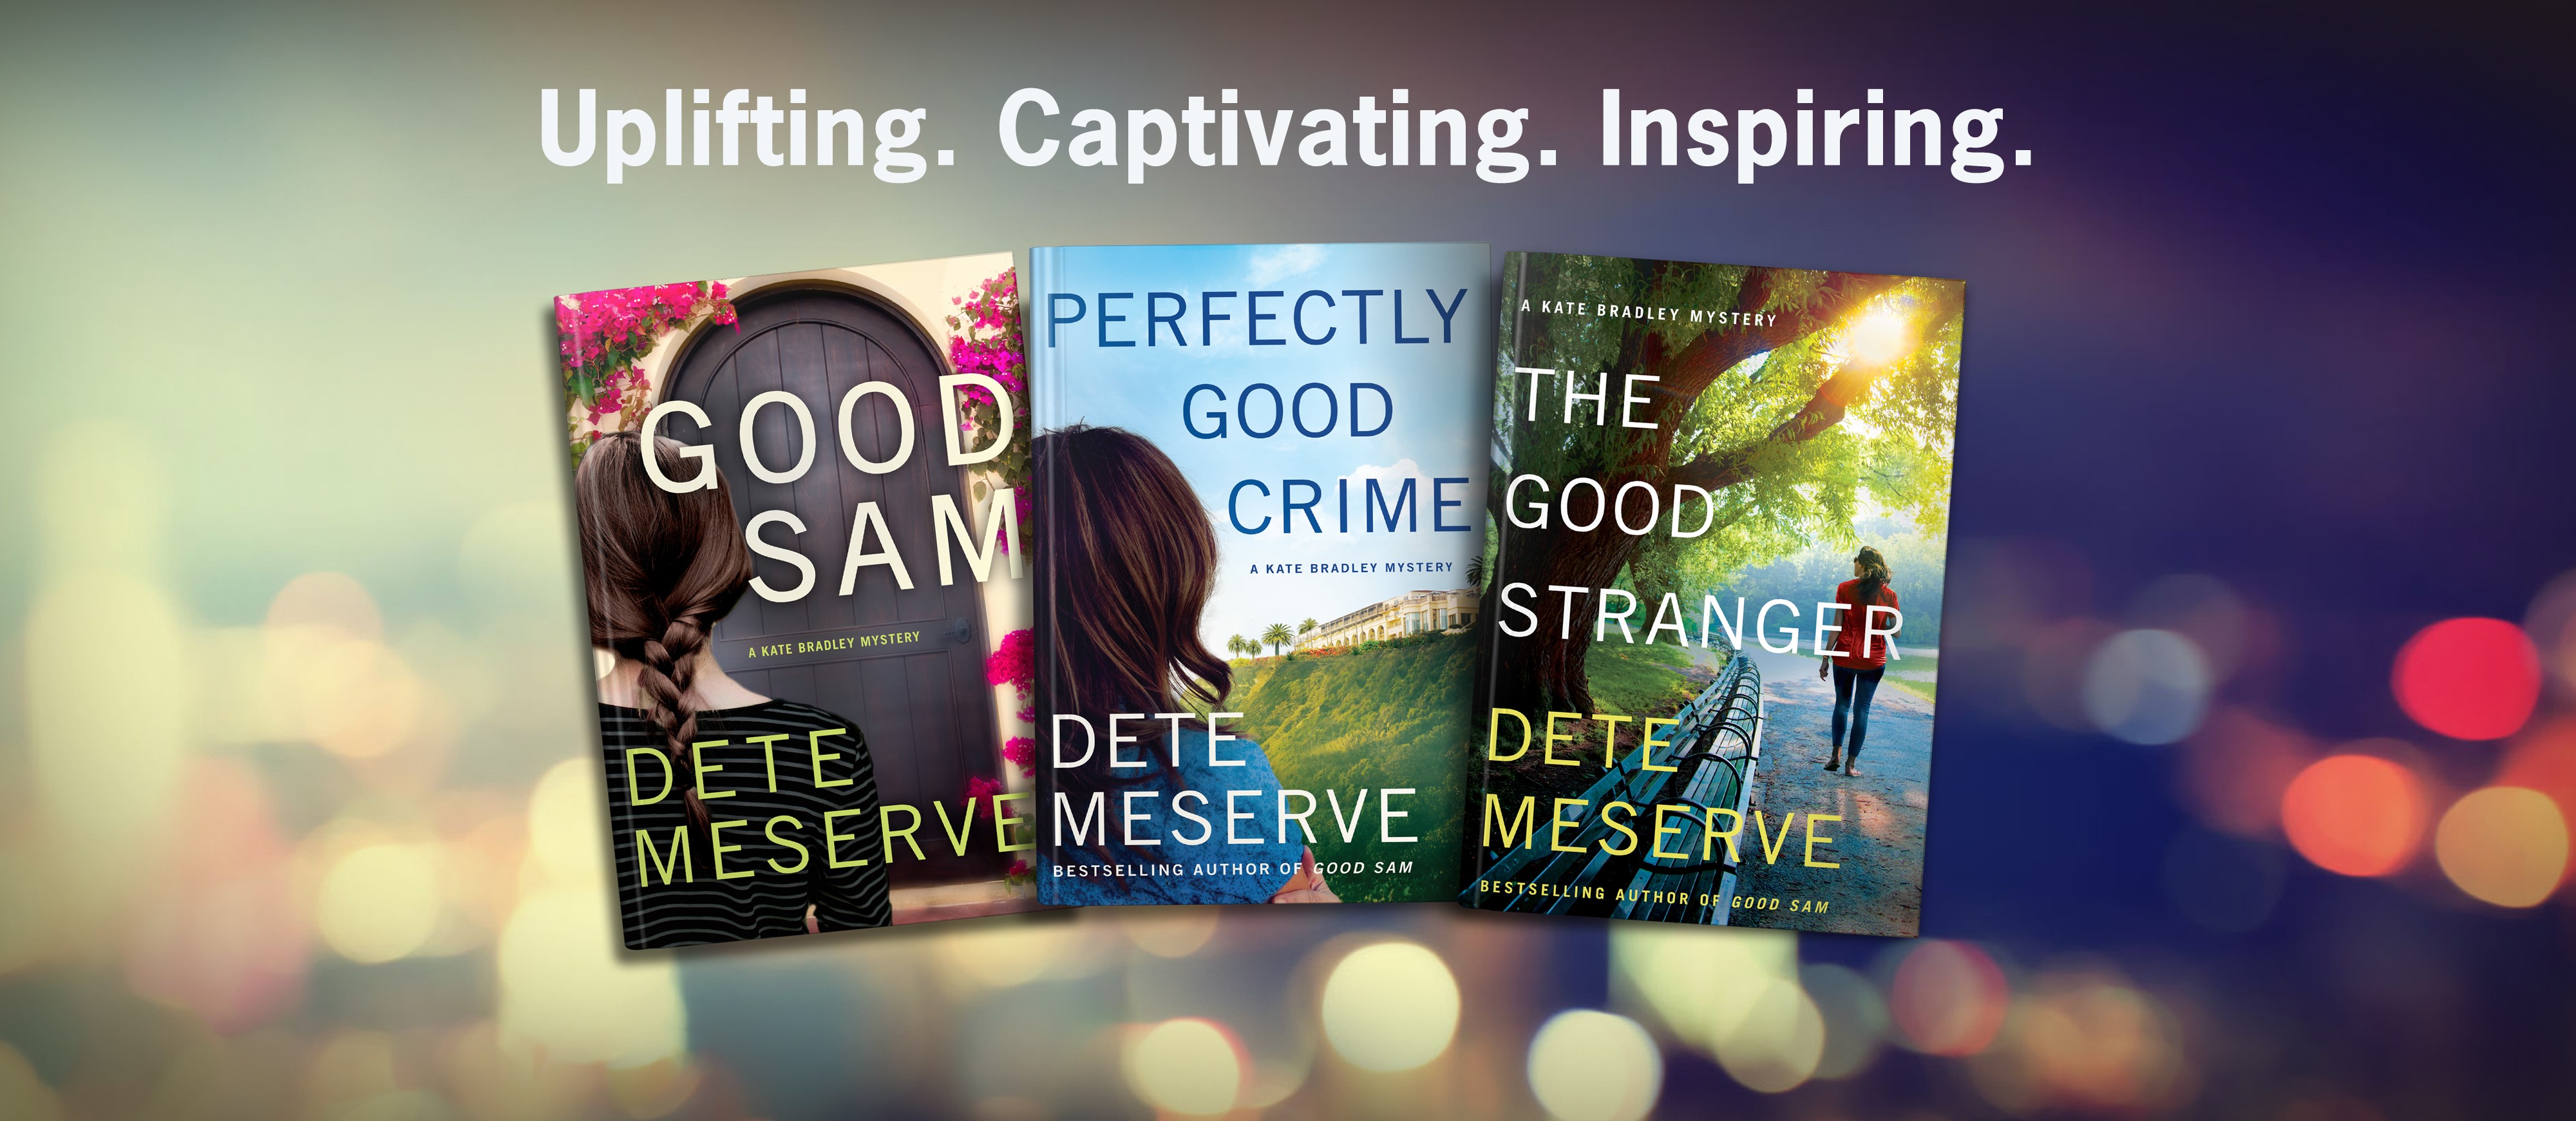 Uplifting. Captivating. Inspiring. - Kate Bradley Mystery Series by Dete Meserve; Good Sam; Perfectly Good Crime; The Good Stranger;